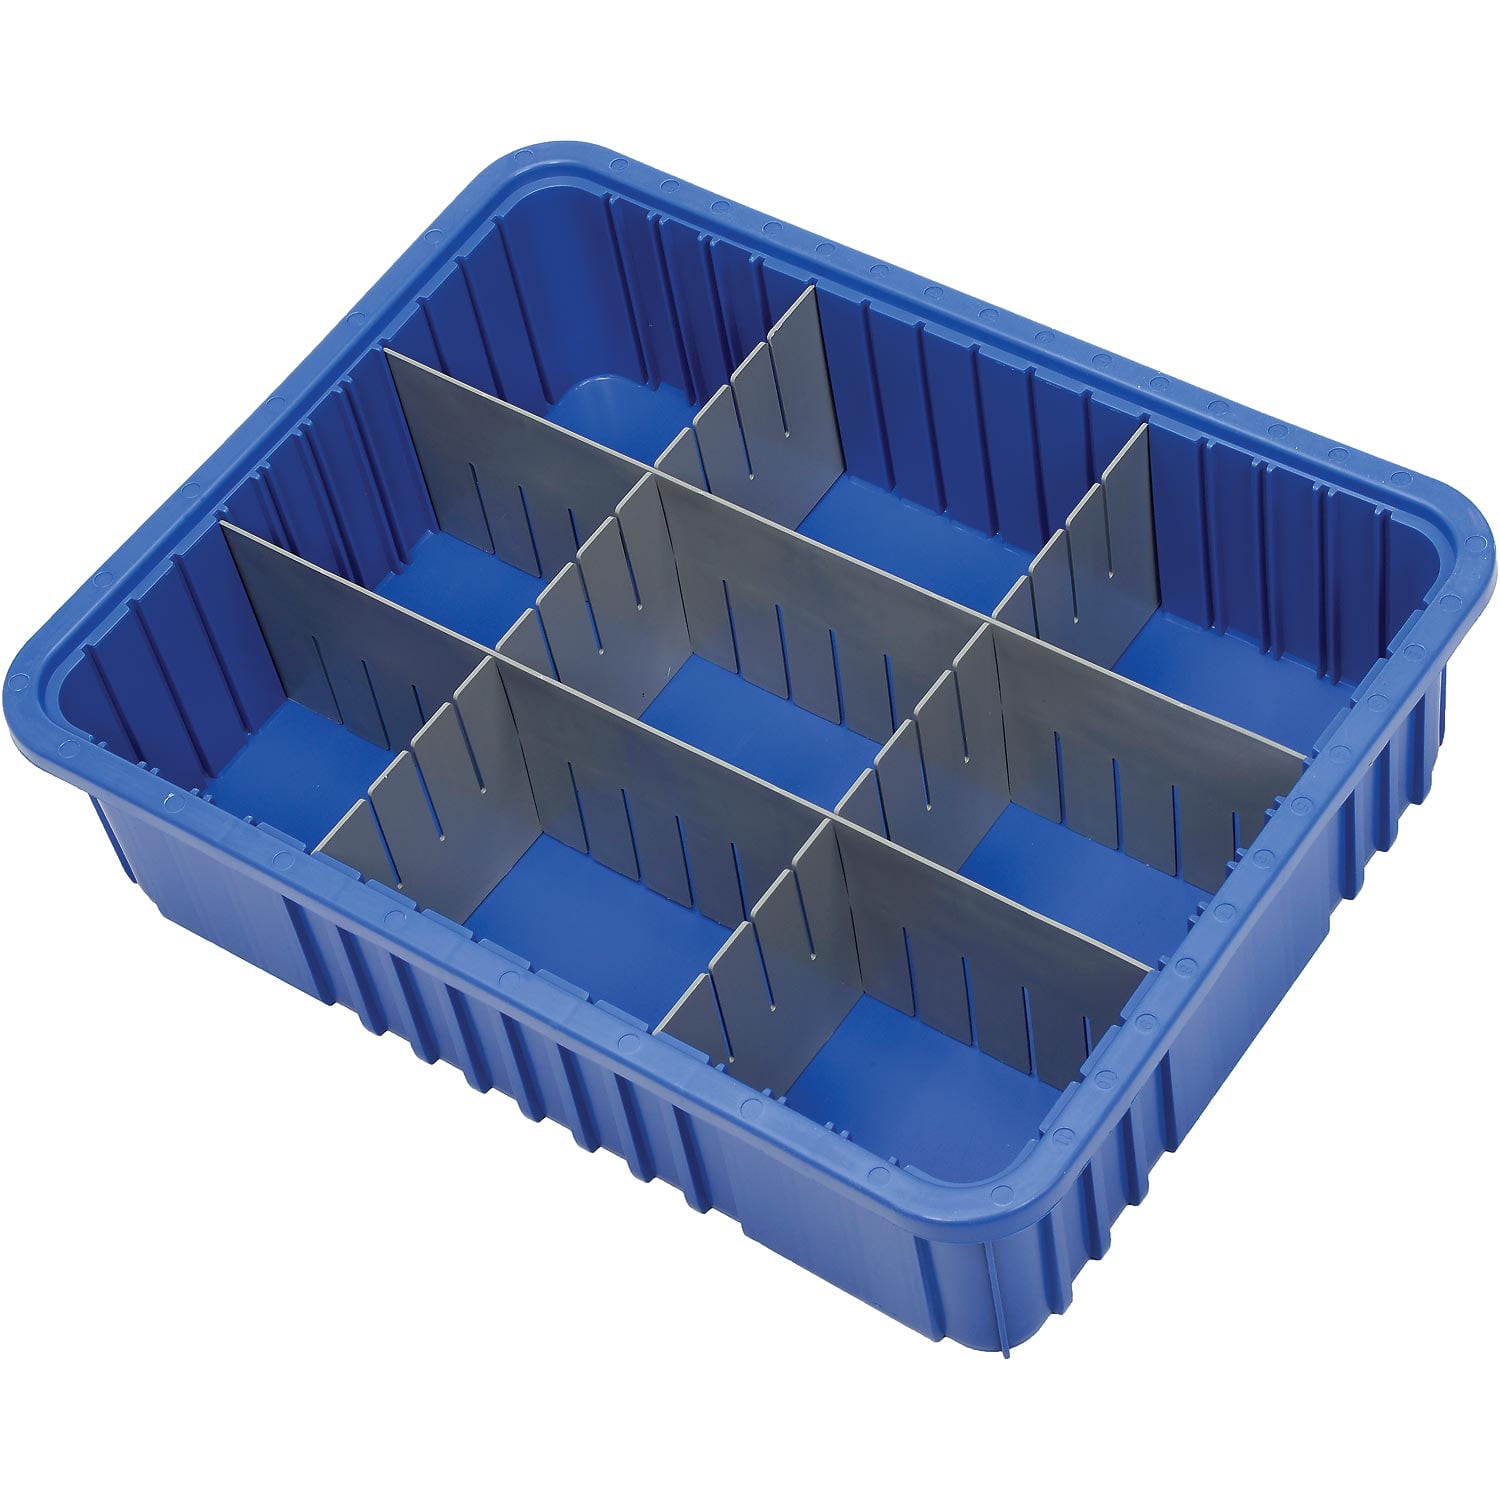 22-1/2"L x 17-1/2"W x 6"H Plastic Dividable Grid Container Blue Lot of 3 